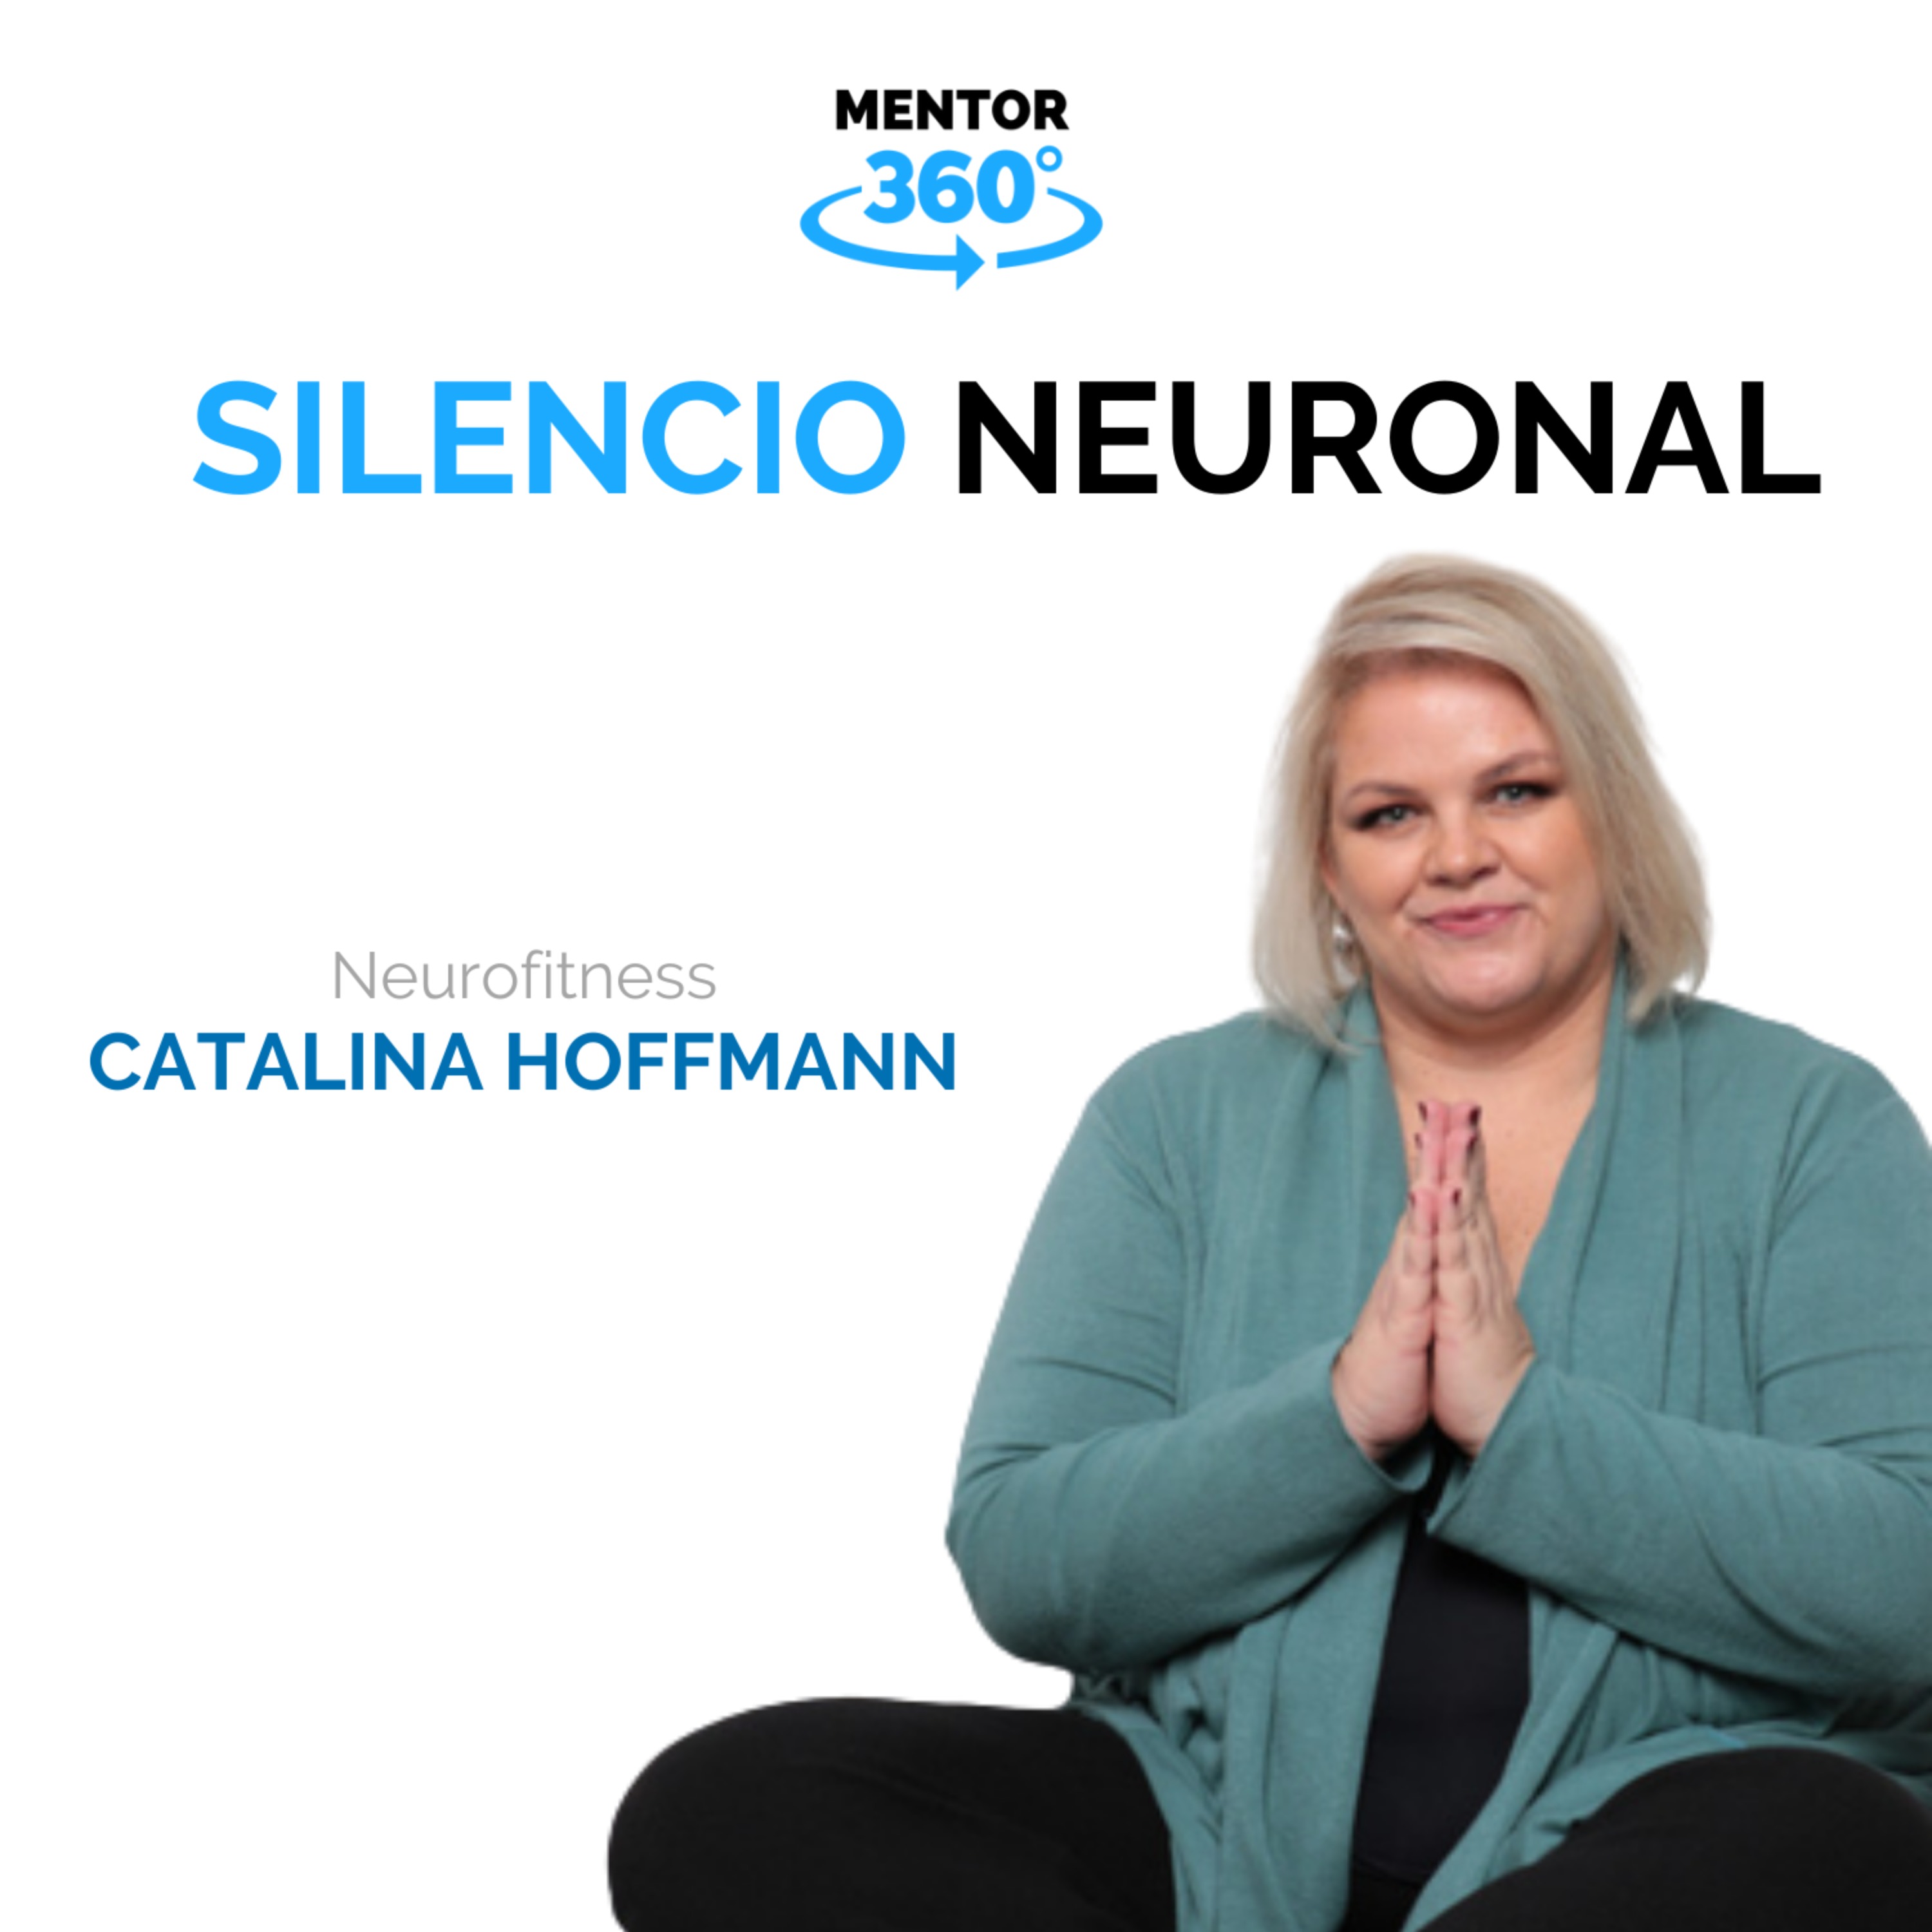 Silencio Neuronal - Neurofitness - Catalina Hoffmann - MENTOR360